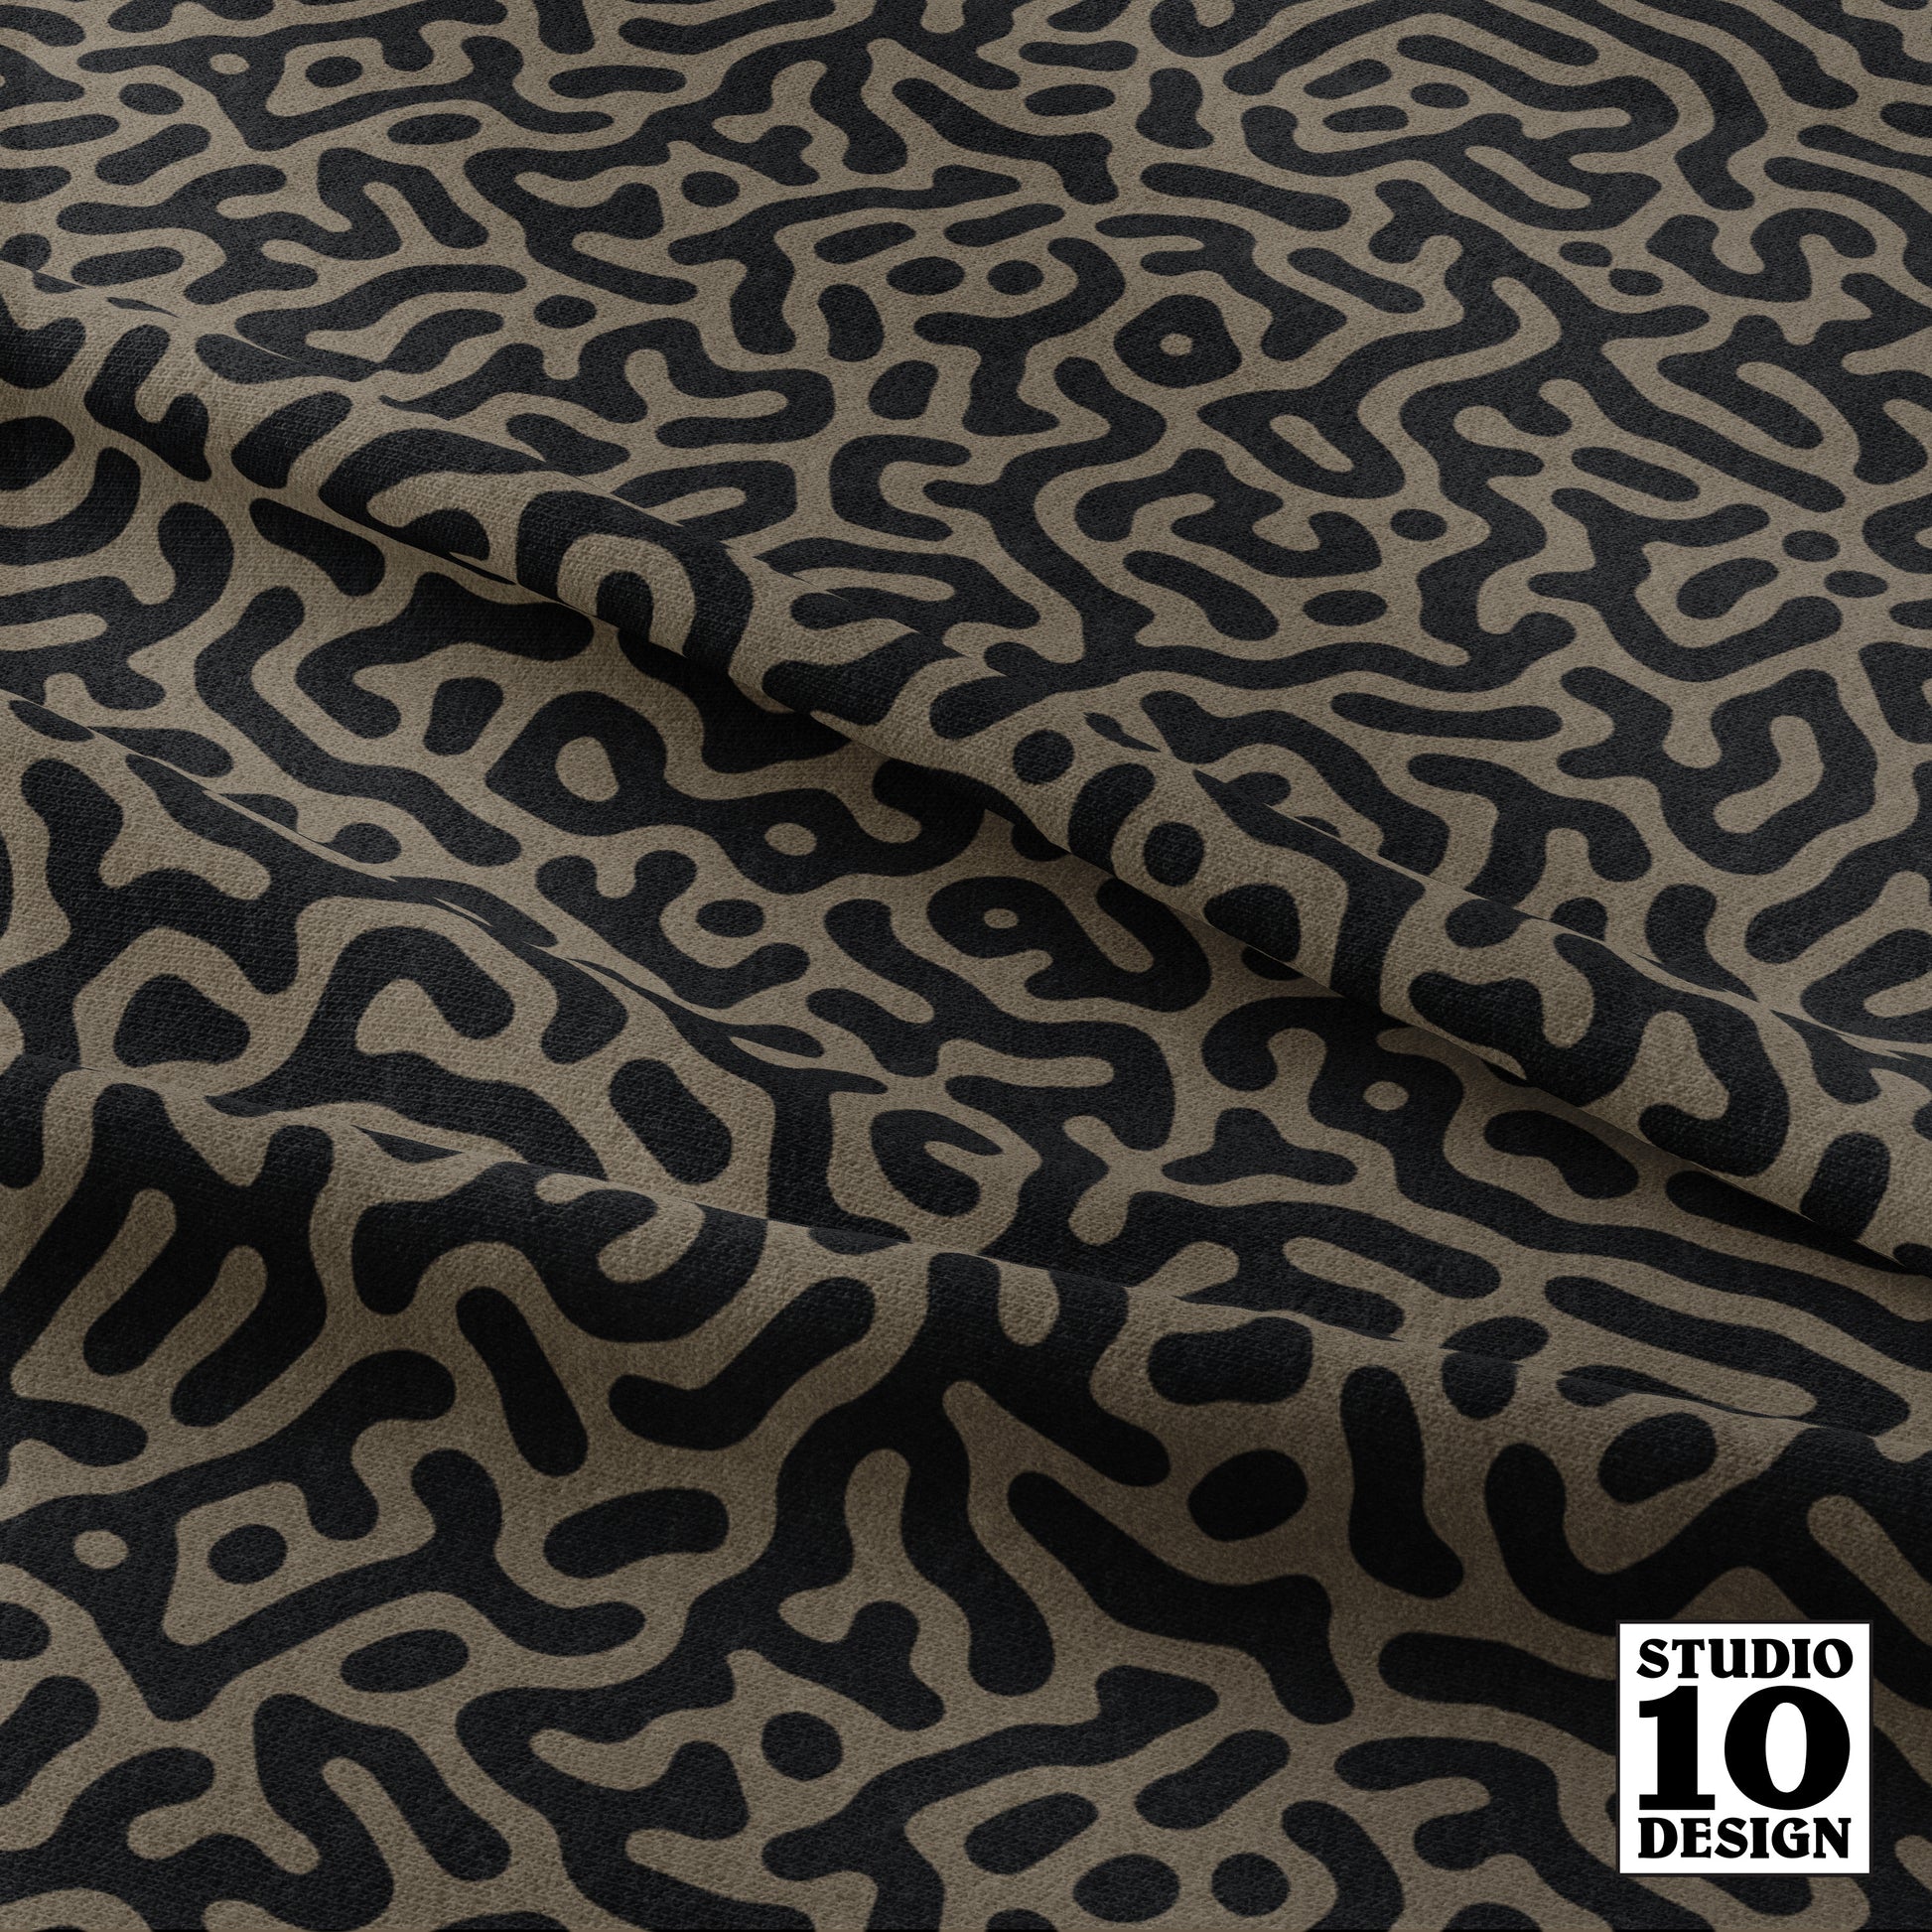 Turing Pattern I: Black + Bark Printed Fabric by Studio Ten Design